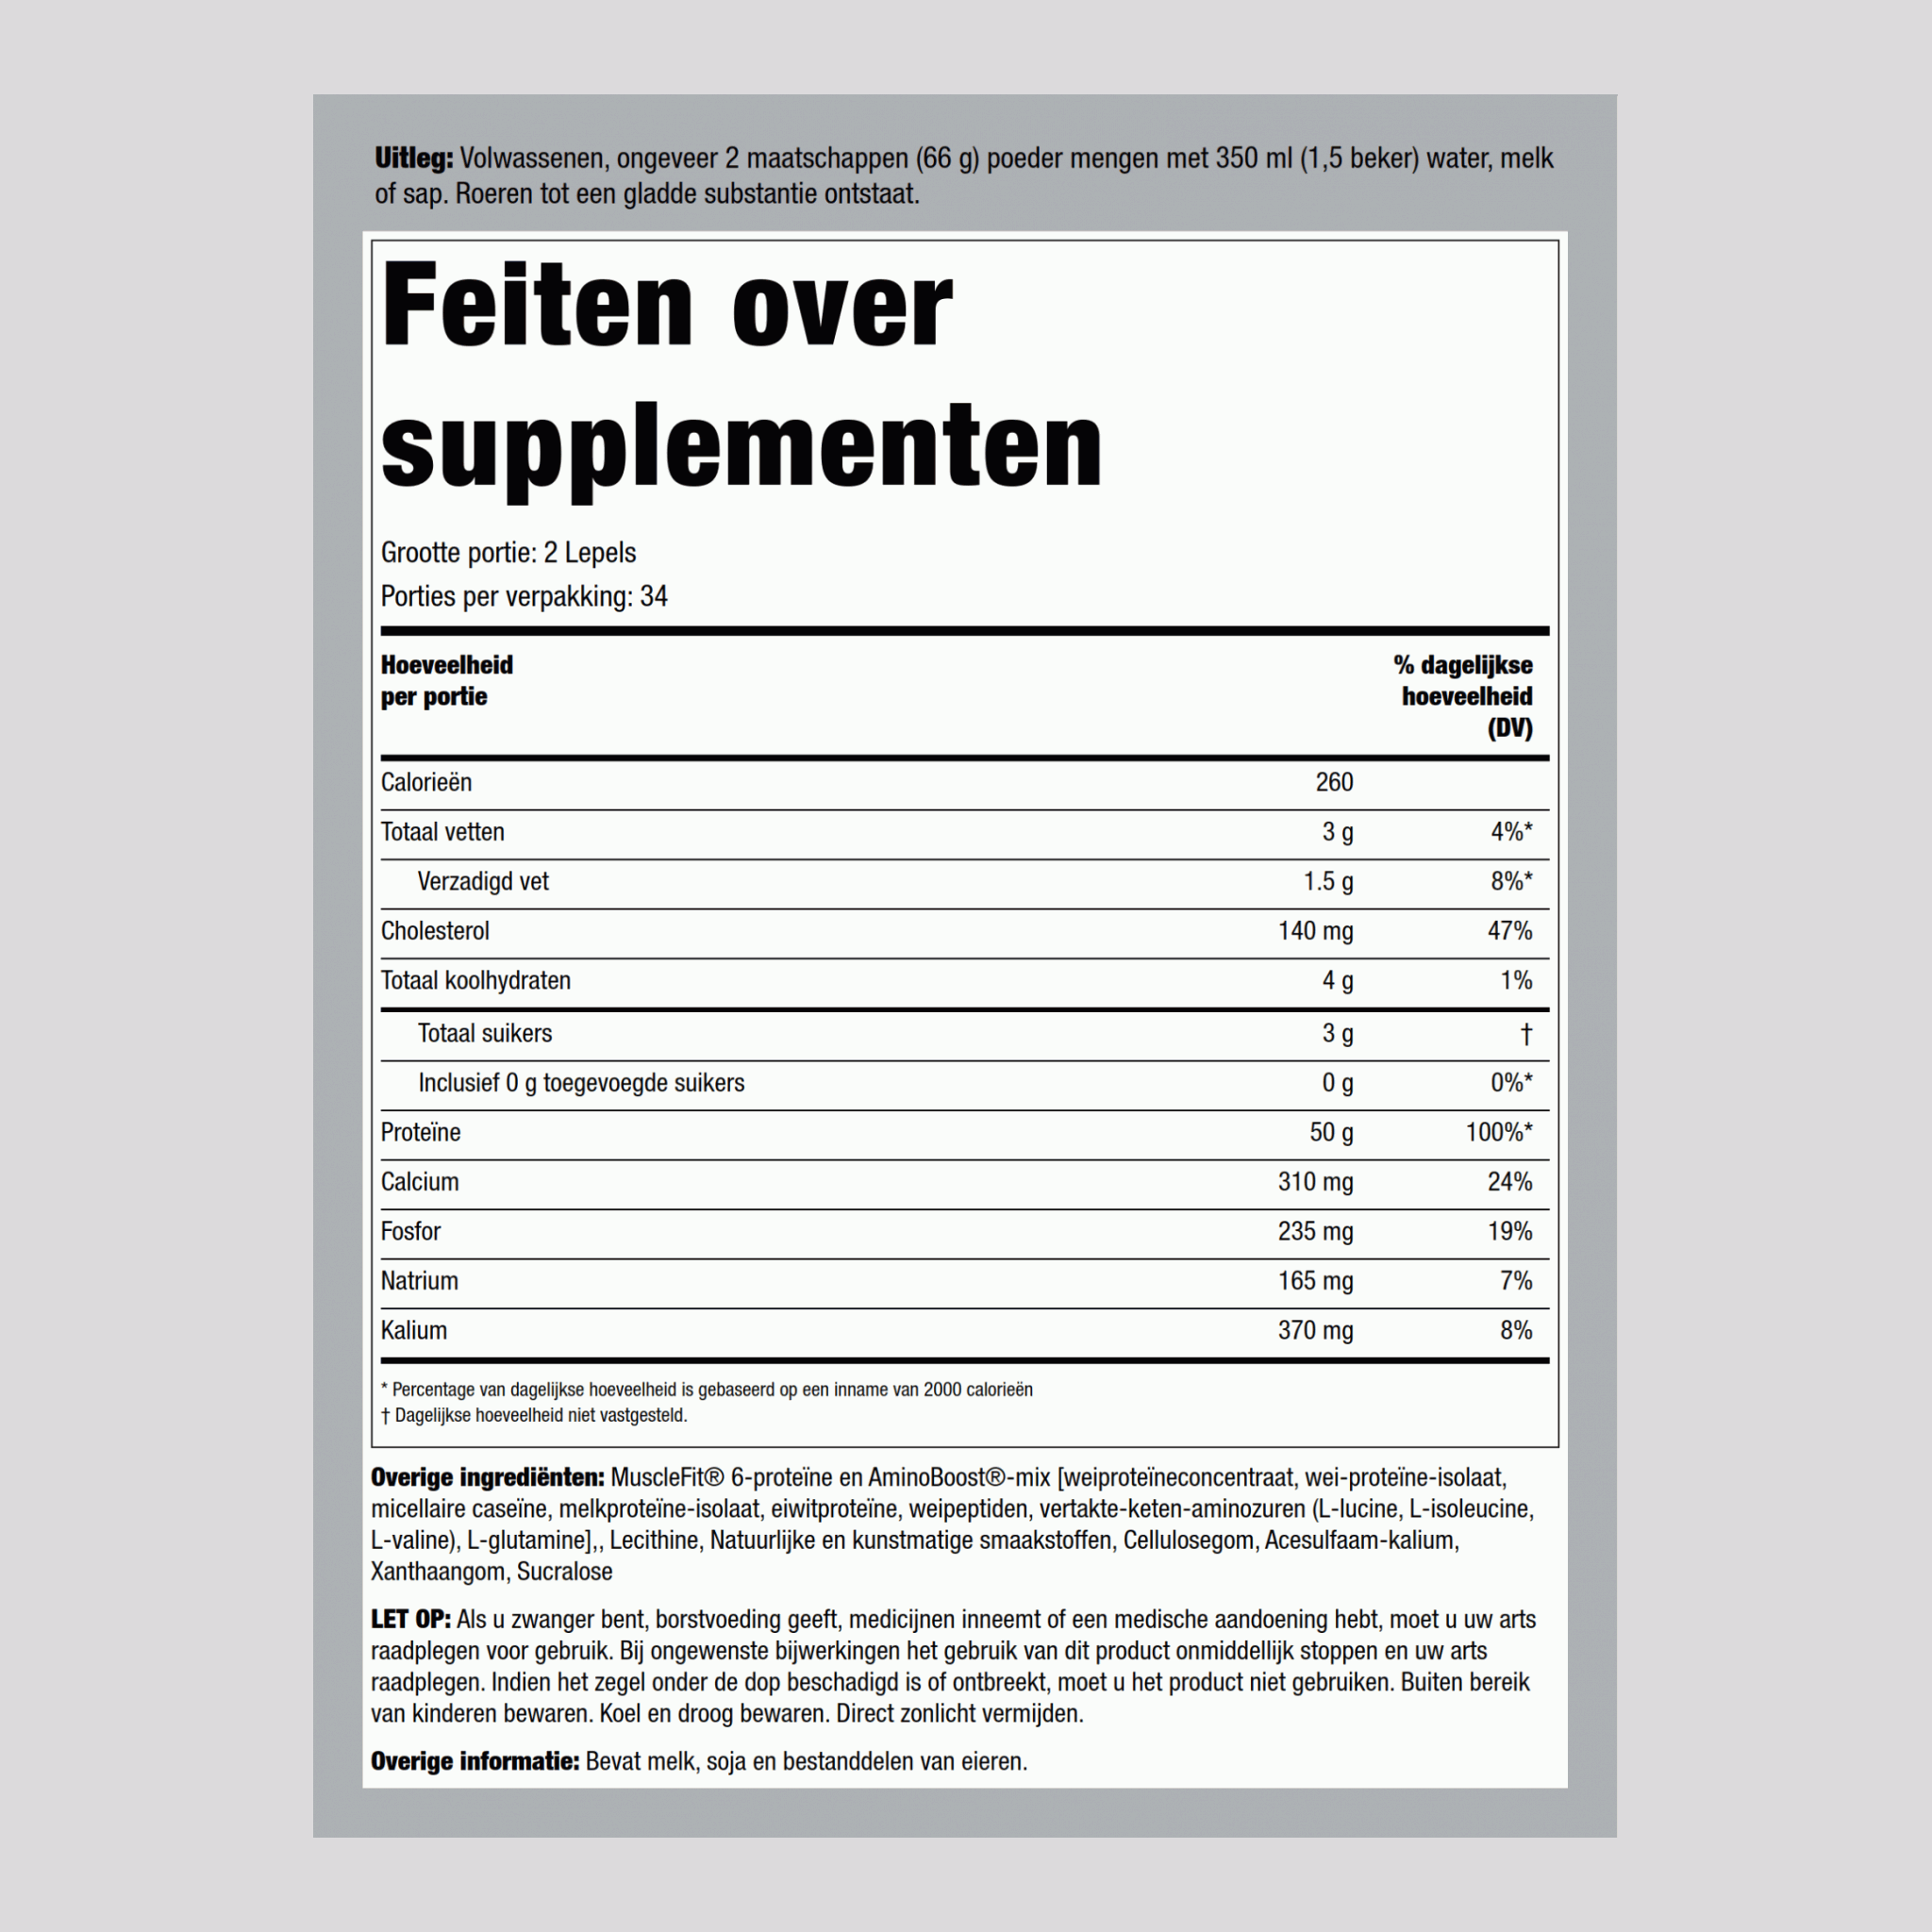 MuscleFIt proteïne (vanille-ijs) 5 pond 2.268 kg Fles    